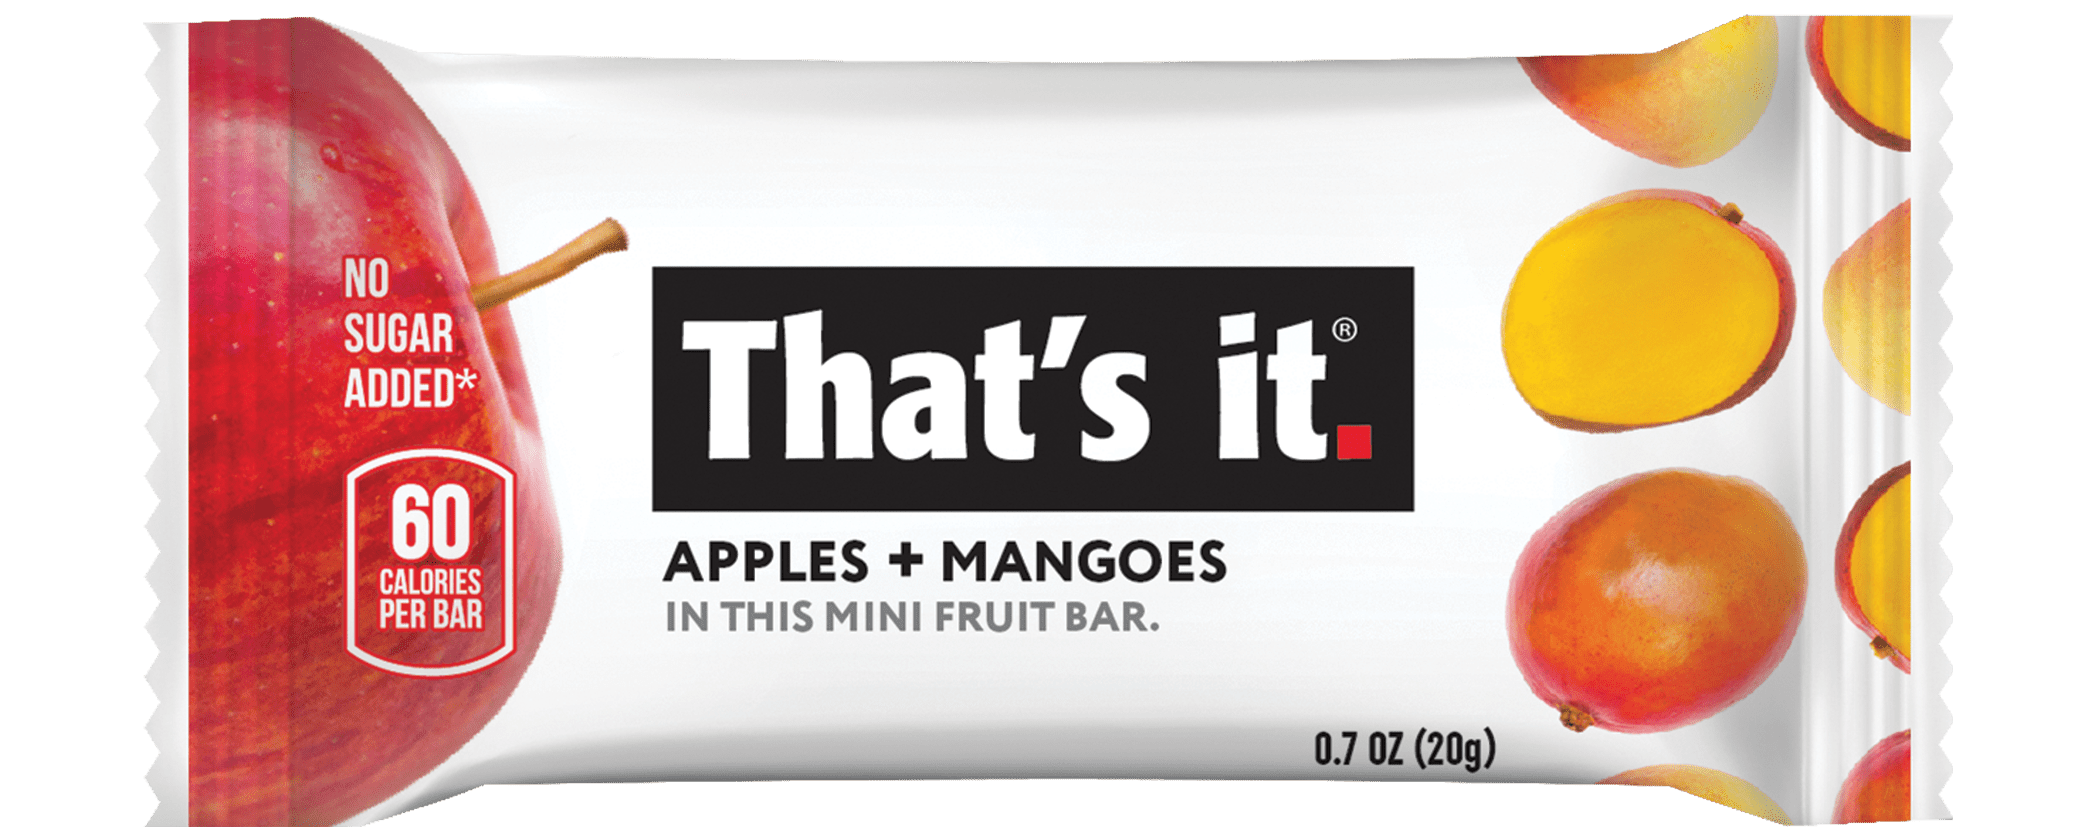 That's It Mini Fruit Bar Apple + Mango 50 units per case 0.7 oz